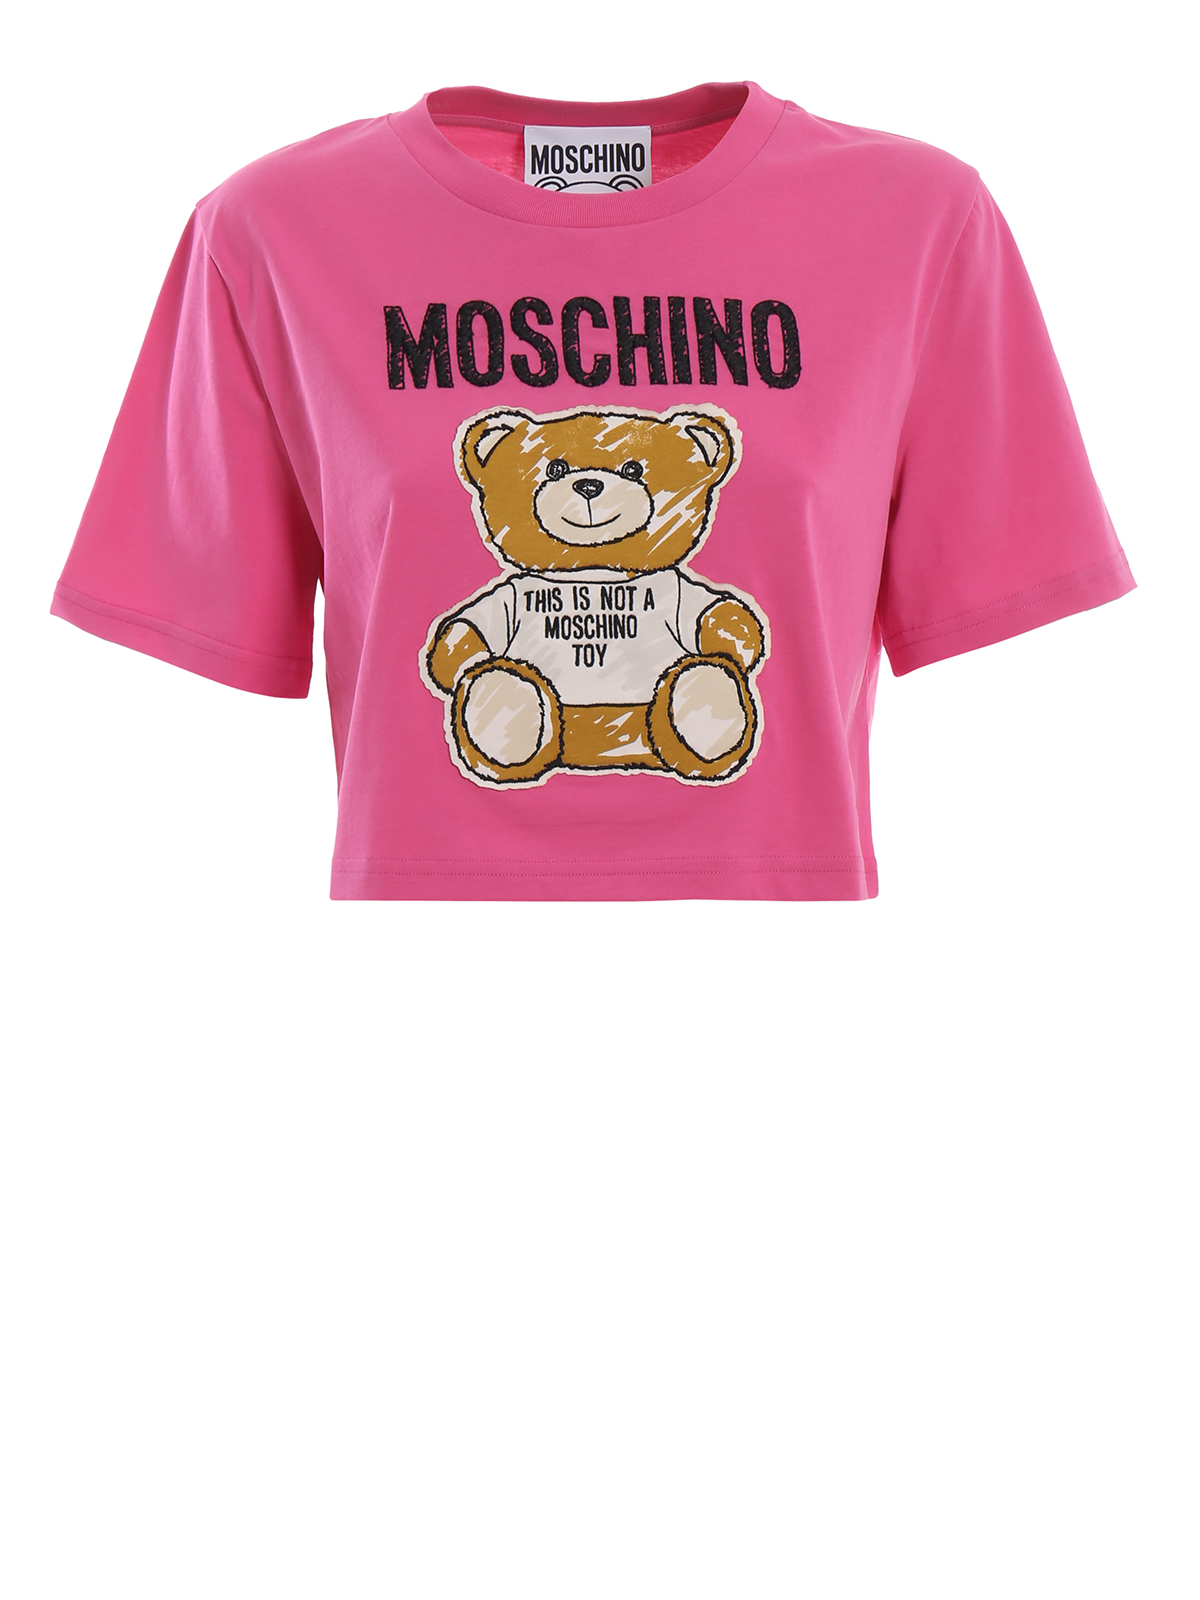 moschino top teddy bear